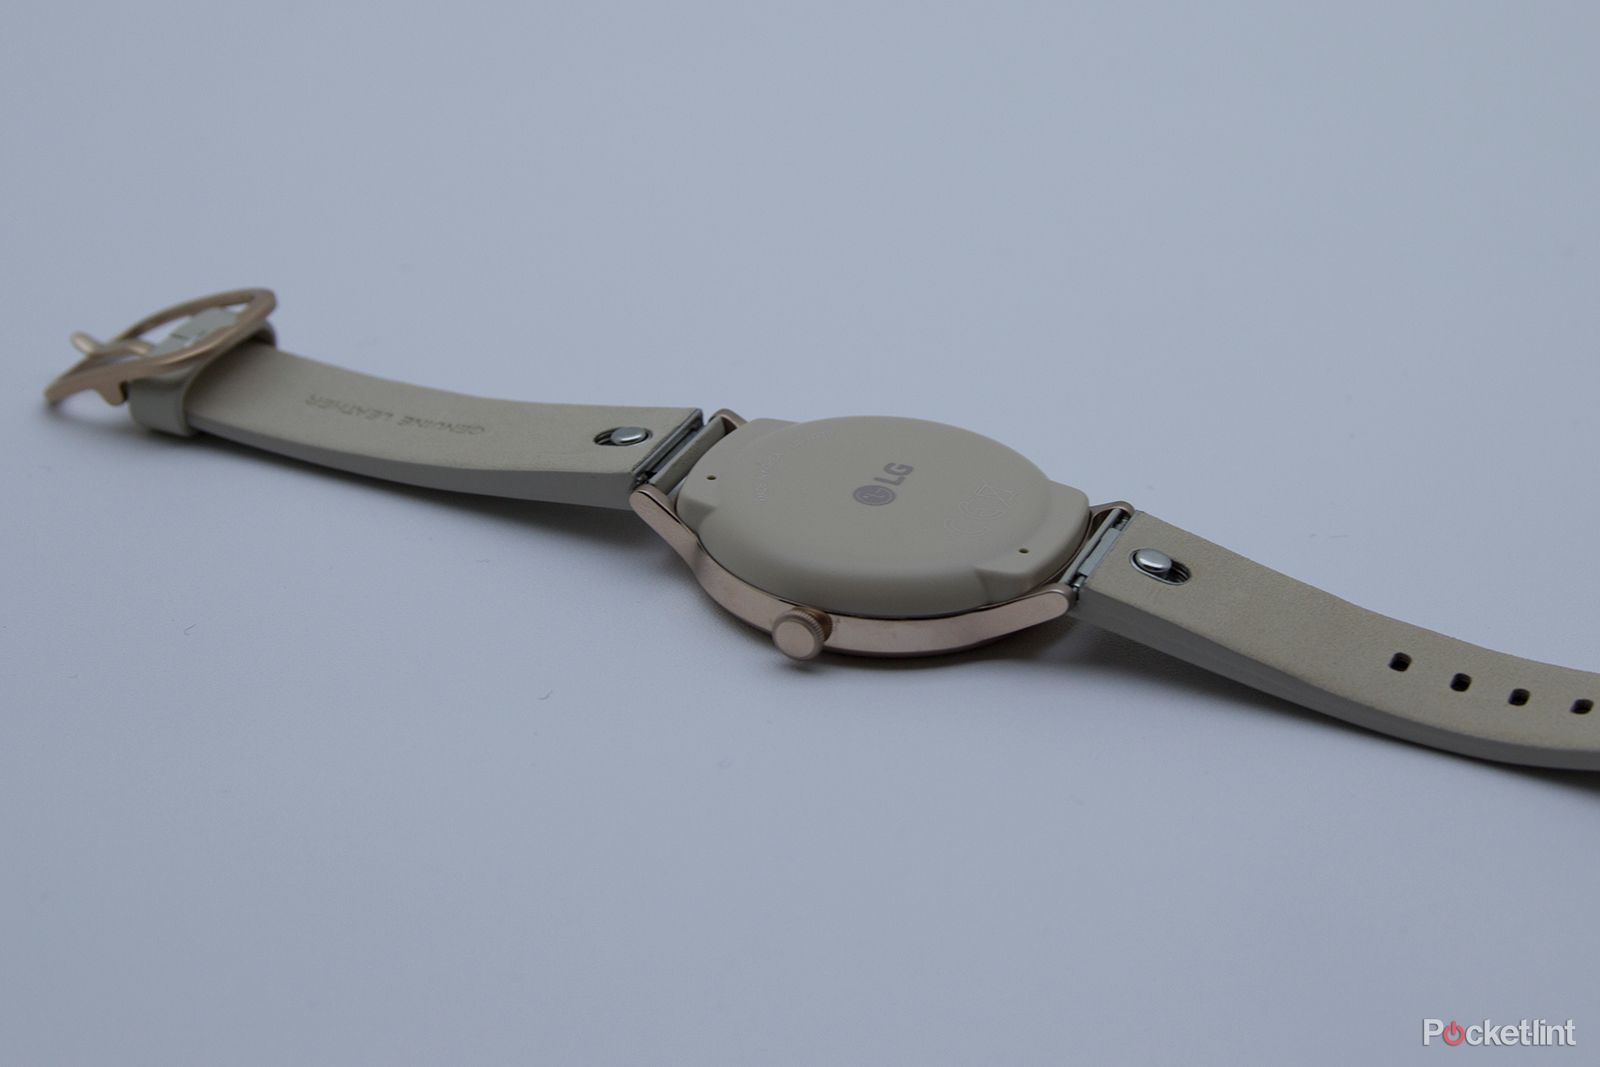 LG Timepiece Wear OS hybrid smartwatch confirmed by FCC image 1